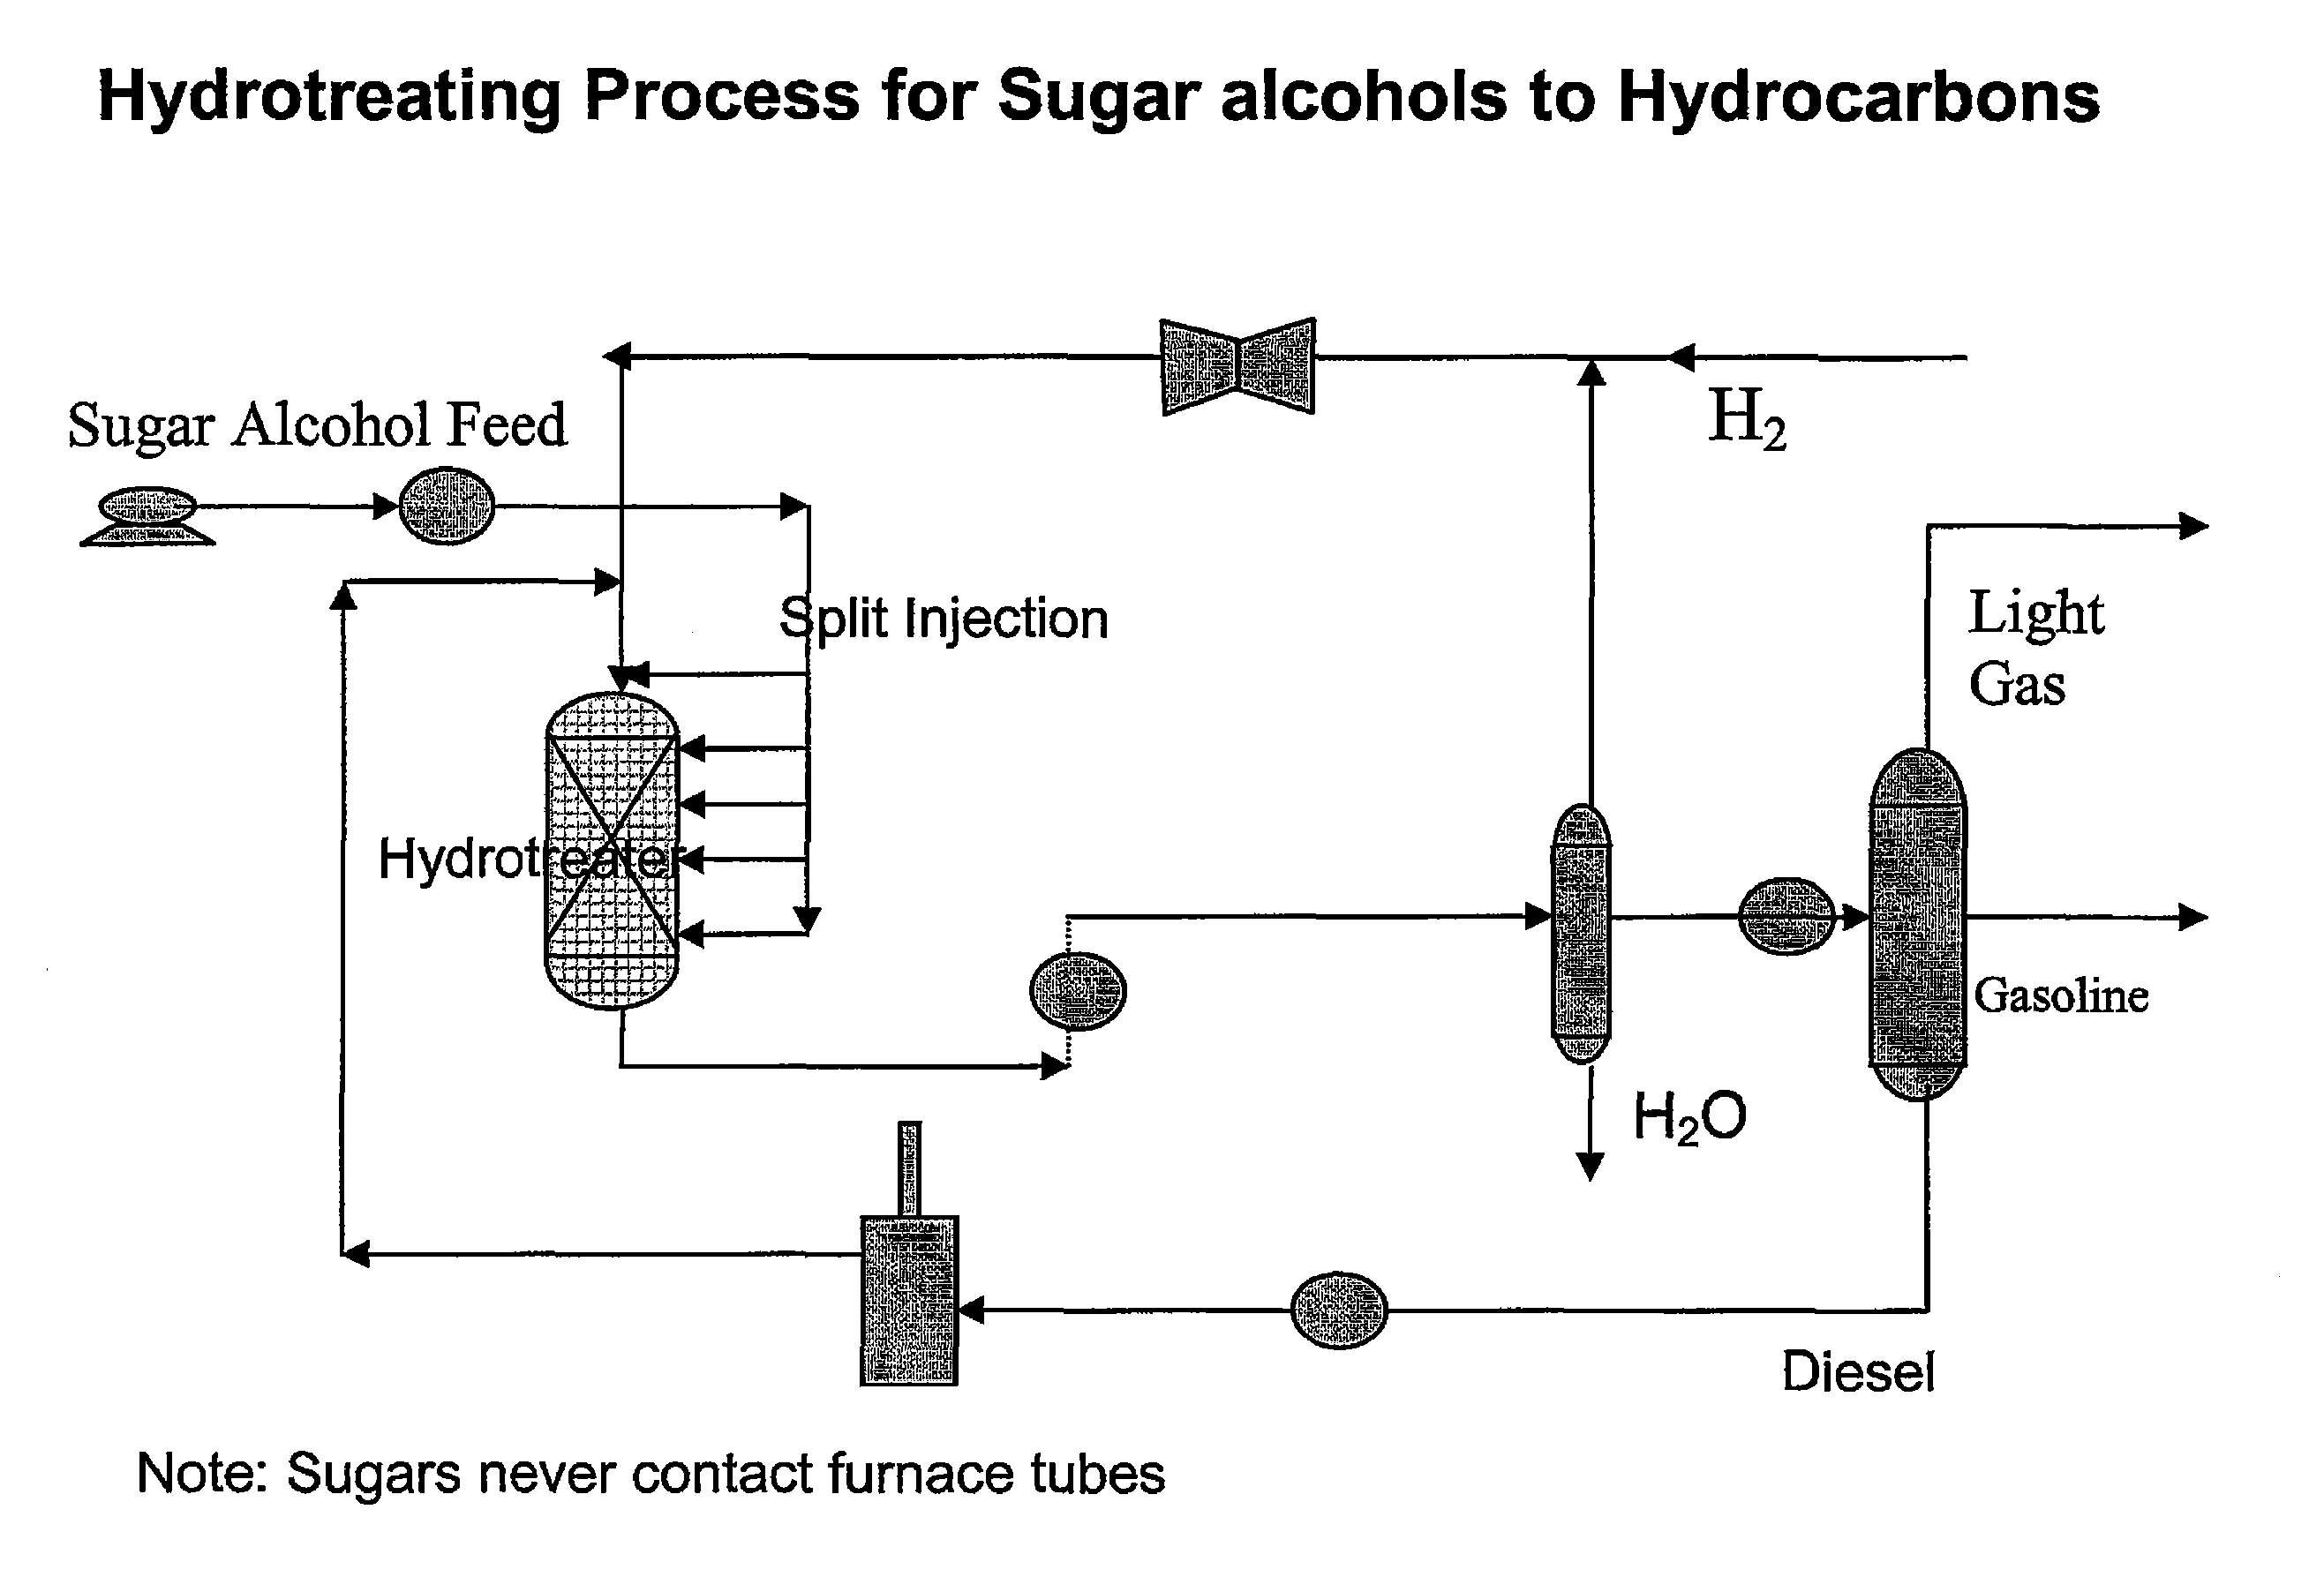 Sugar alcohol split injection conversion